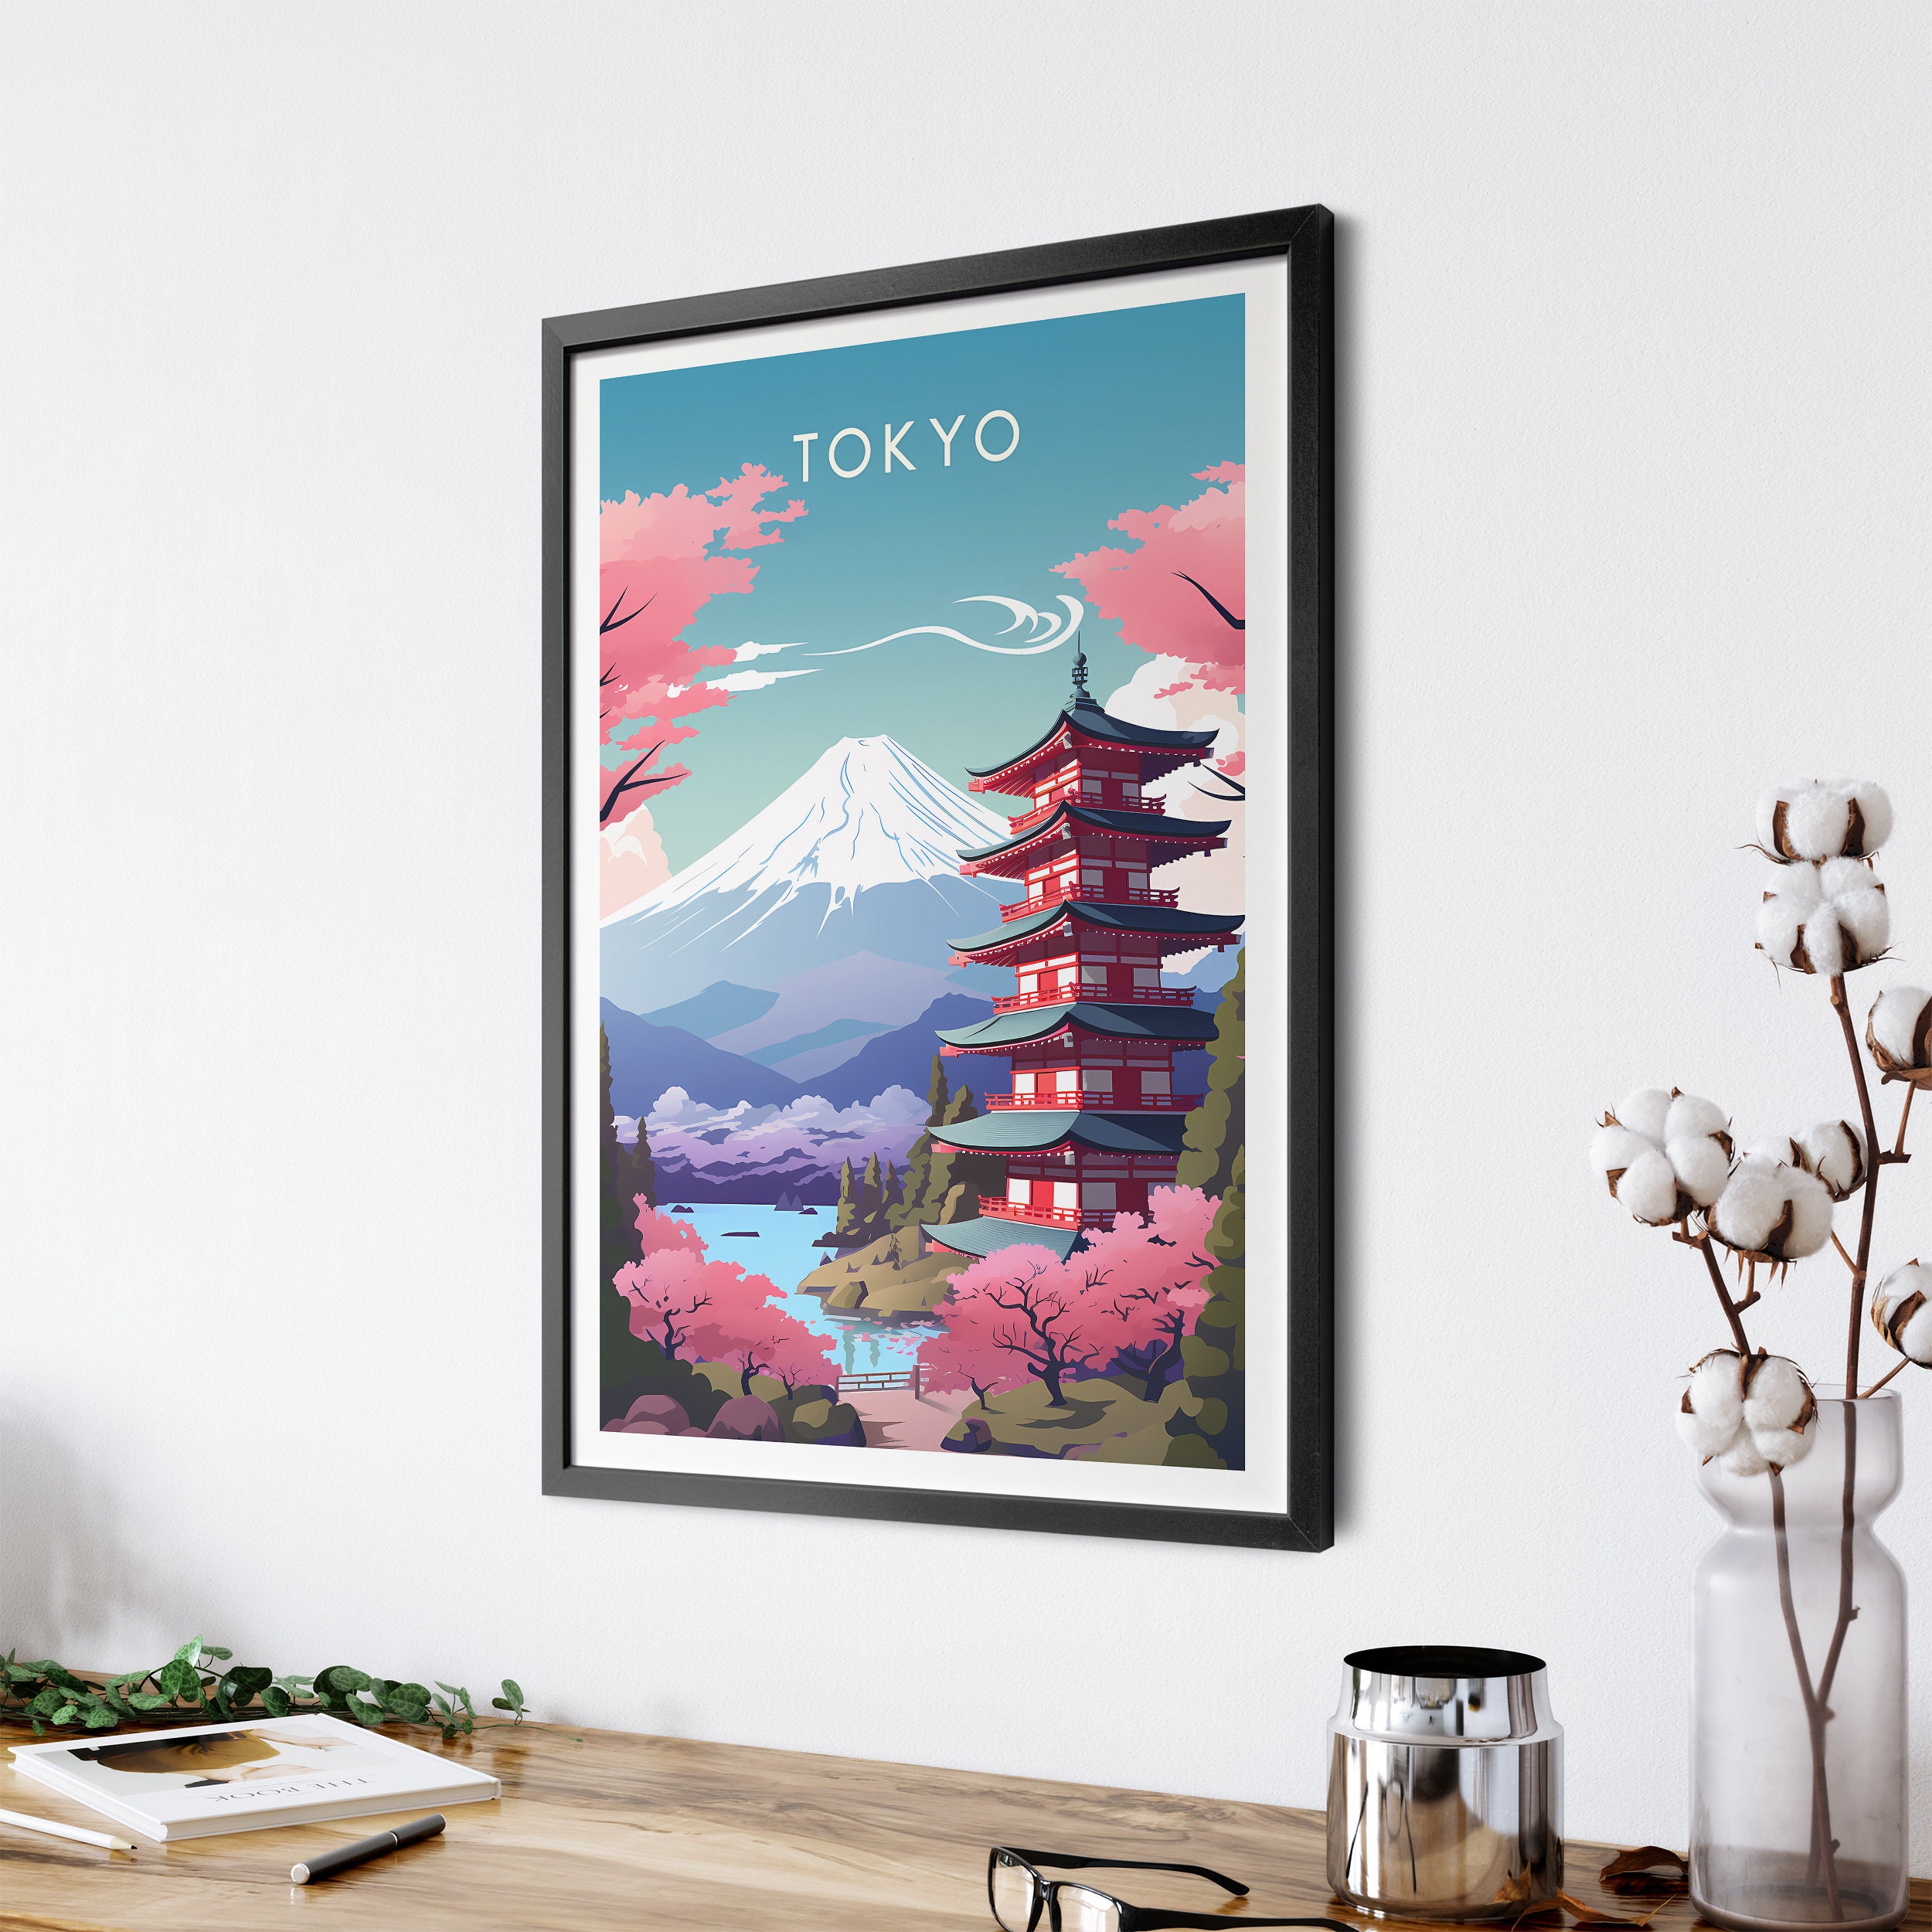 Tokyo Japan Travel Art affiches et impressions par FAA Grafica - Printler